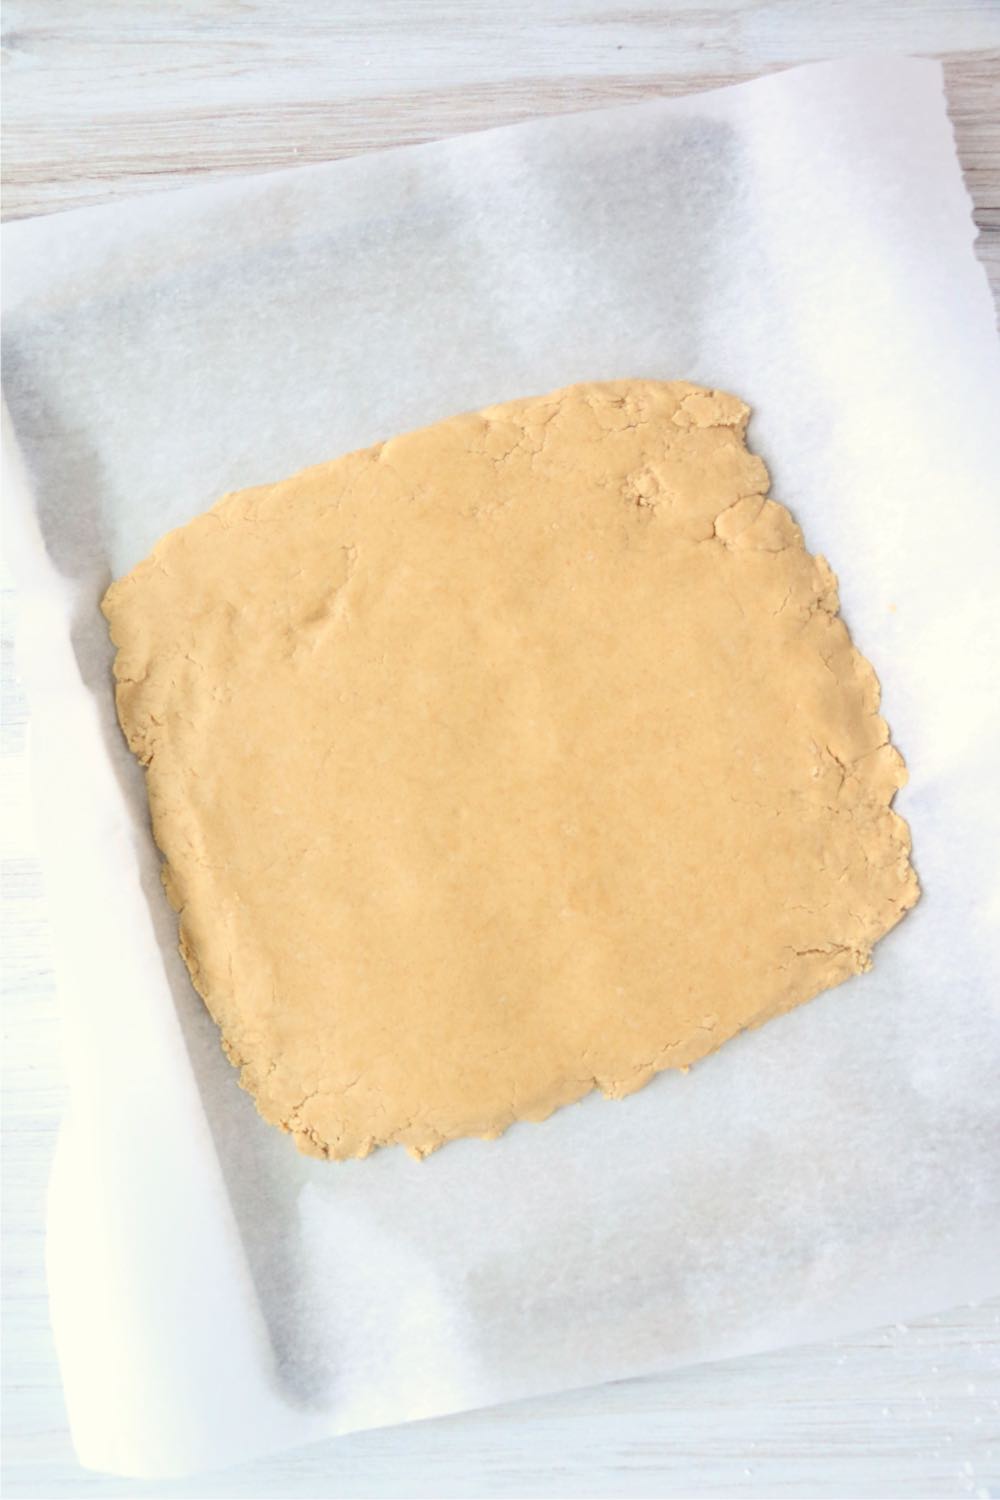 flattened dough on baking sheet